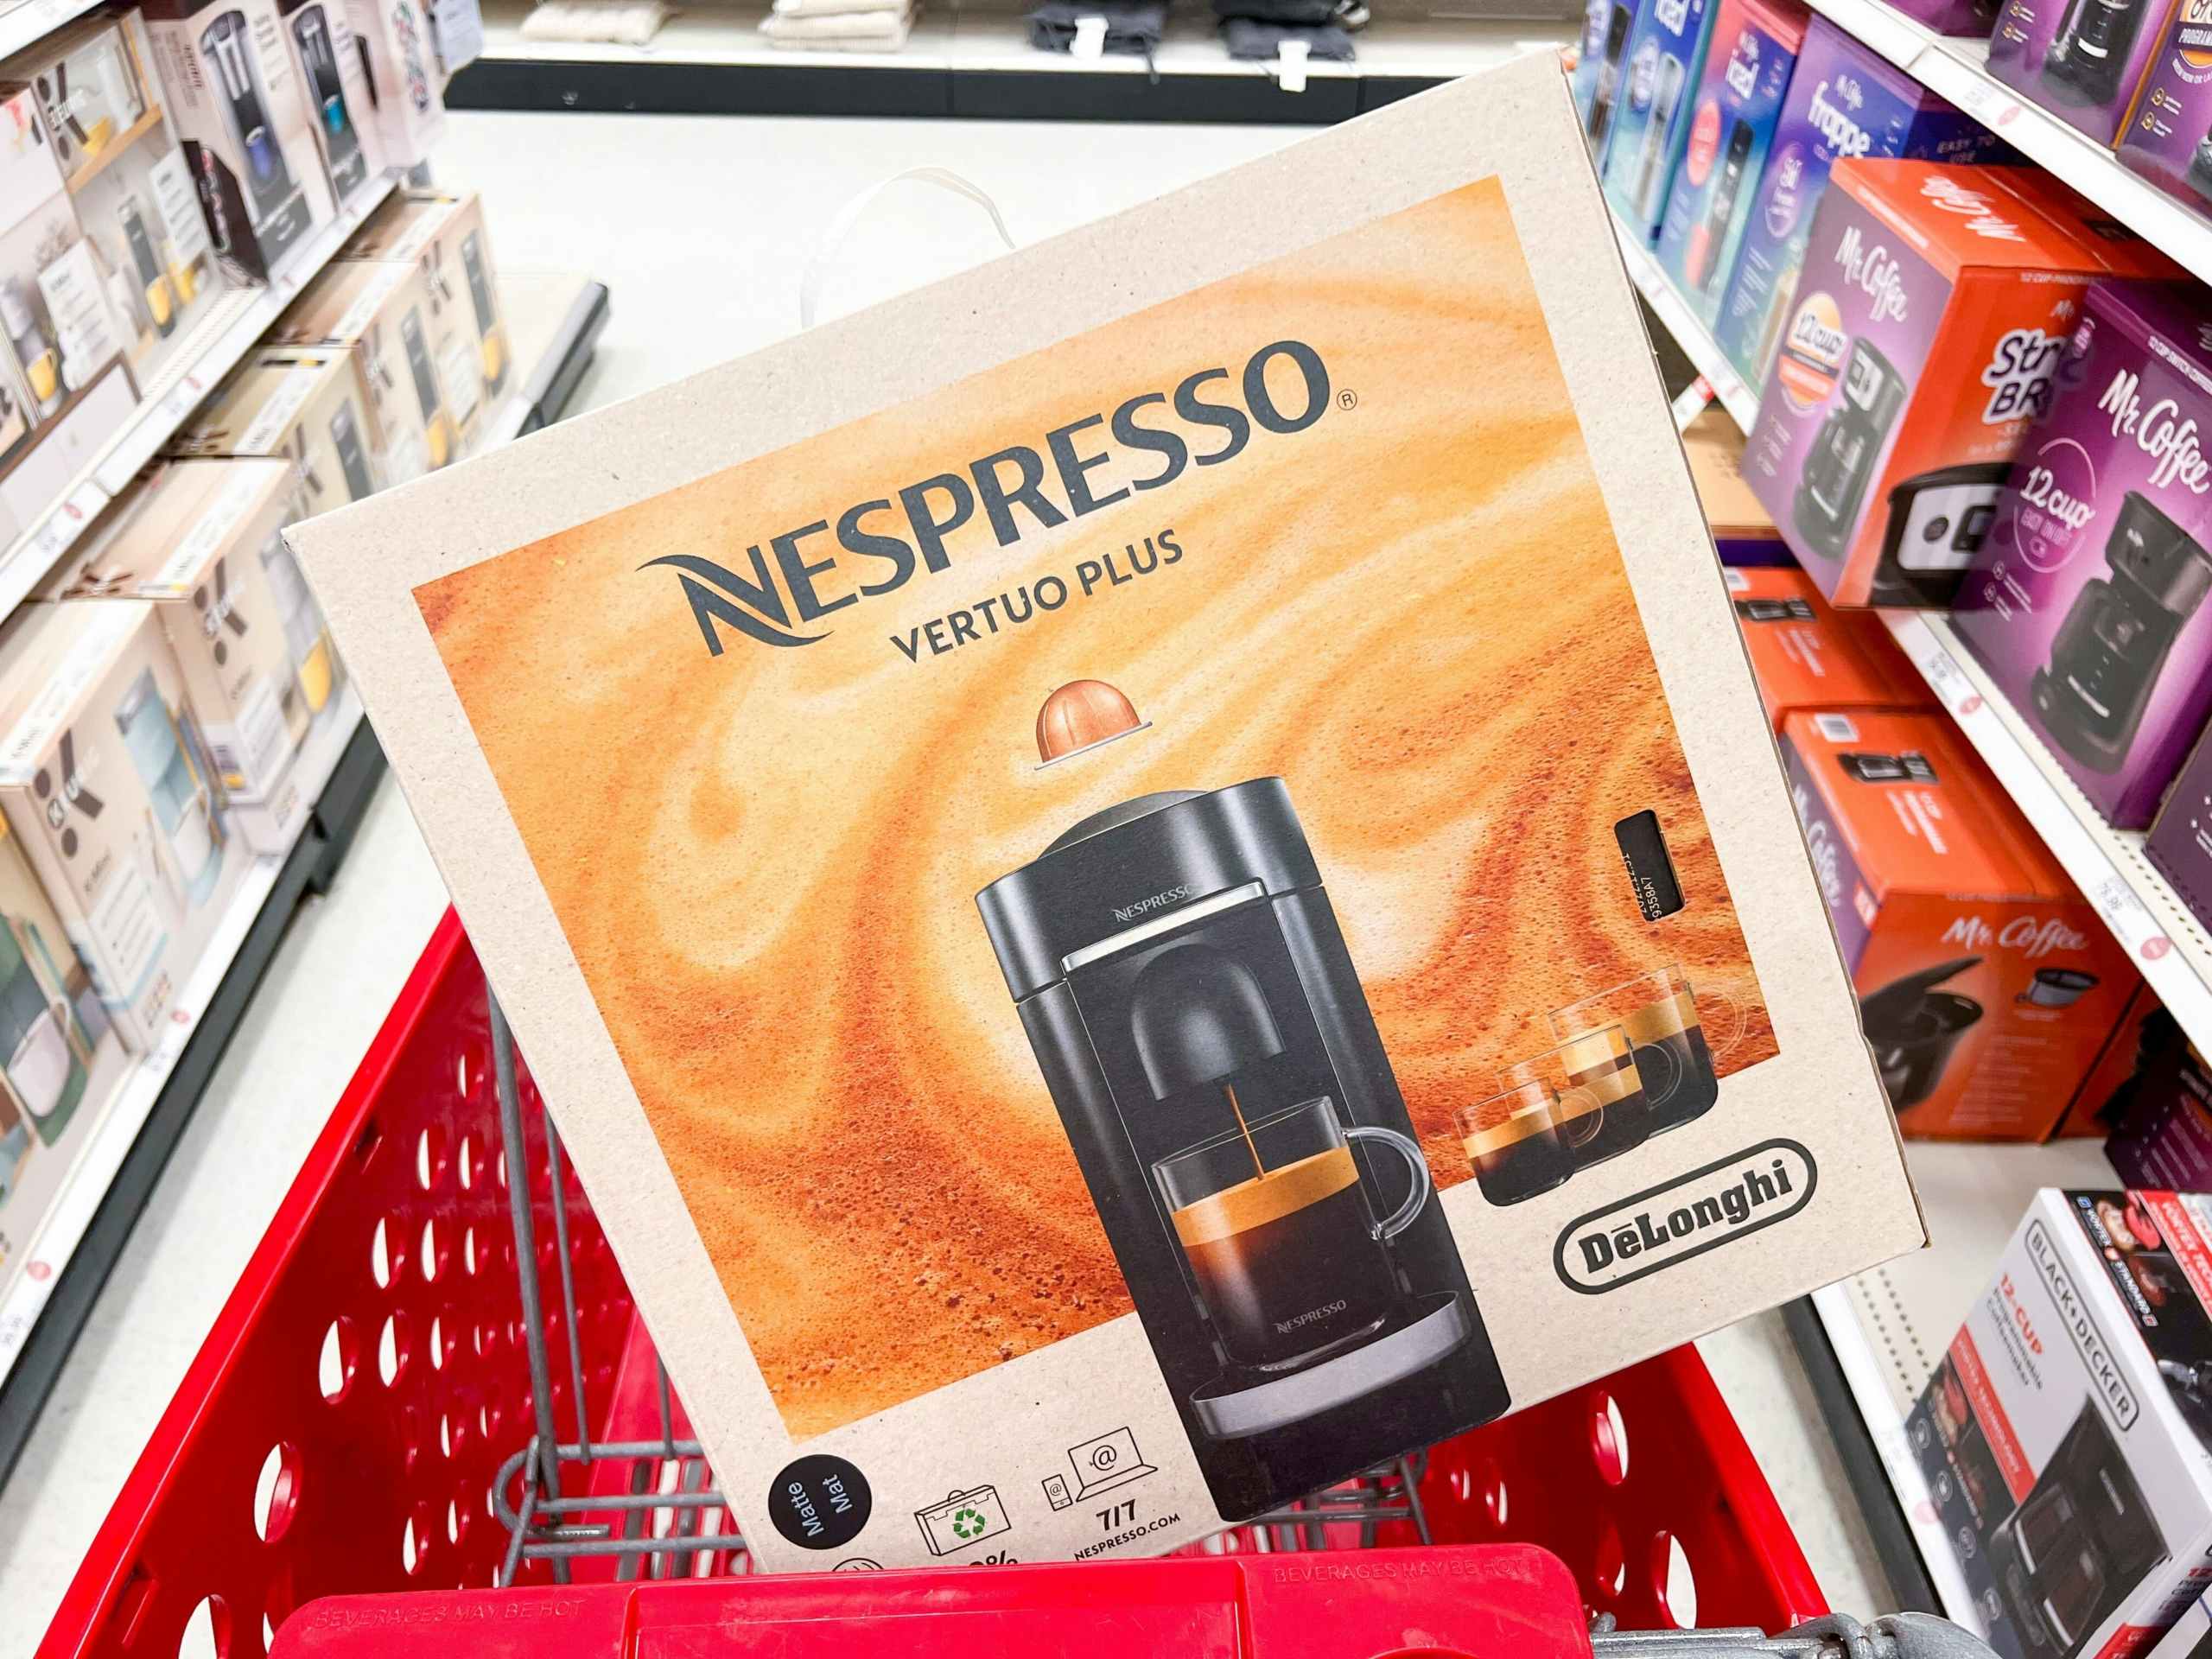 nespresso coffee machine box in cart